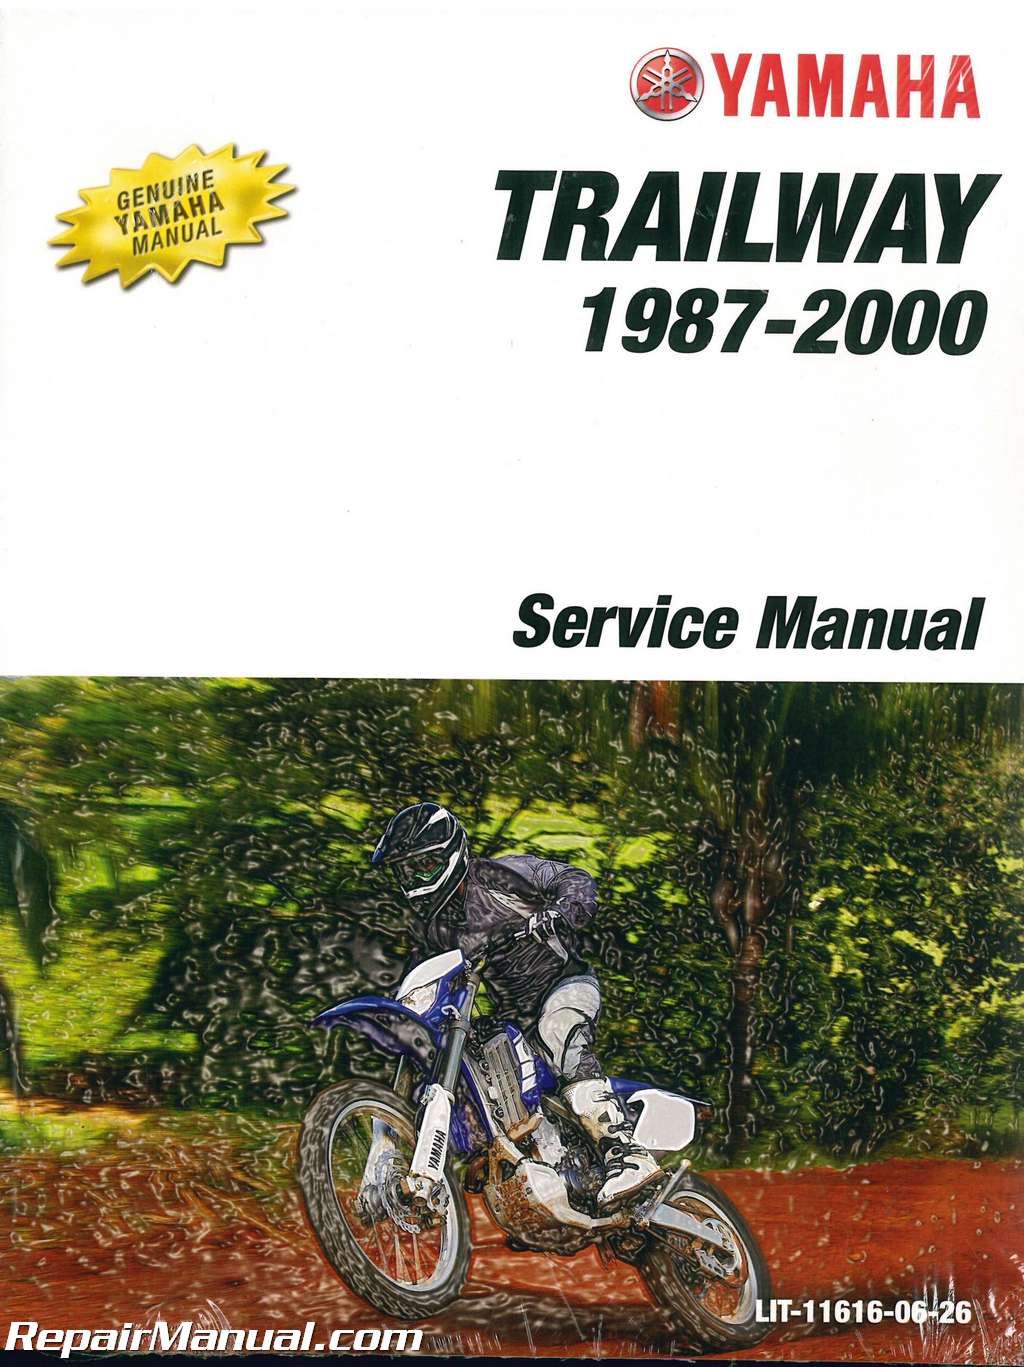 Manual yamaha tw200w/wc 1992 2